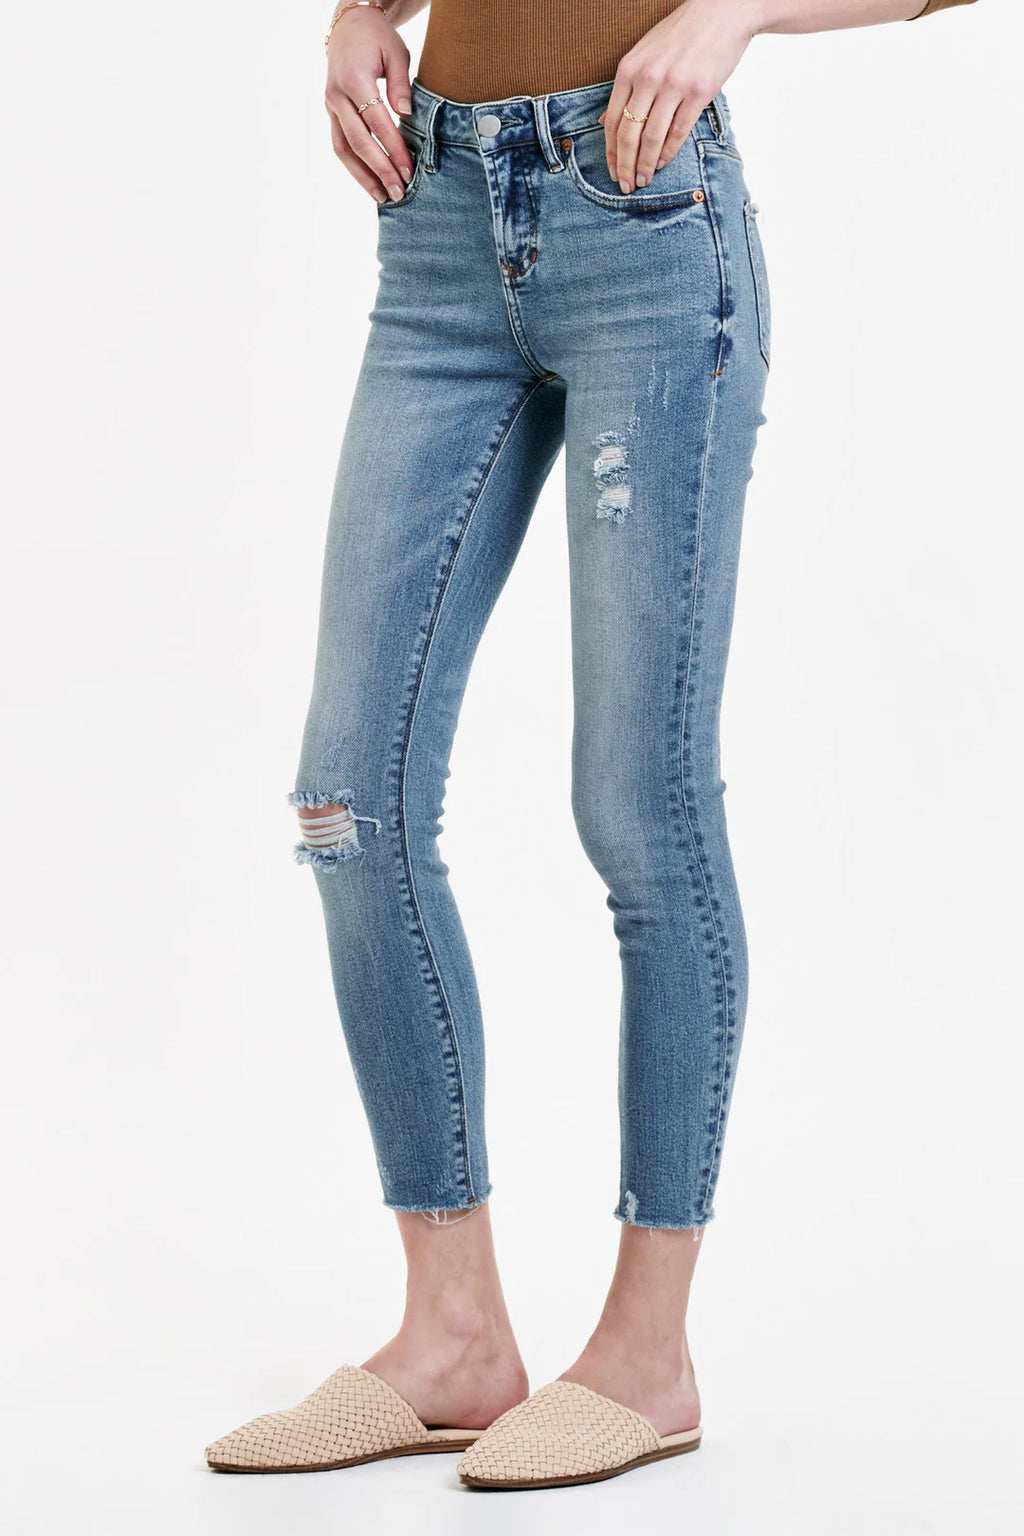 Giselle Skinny Jeans